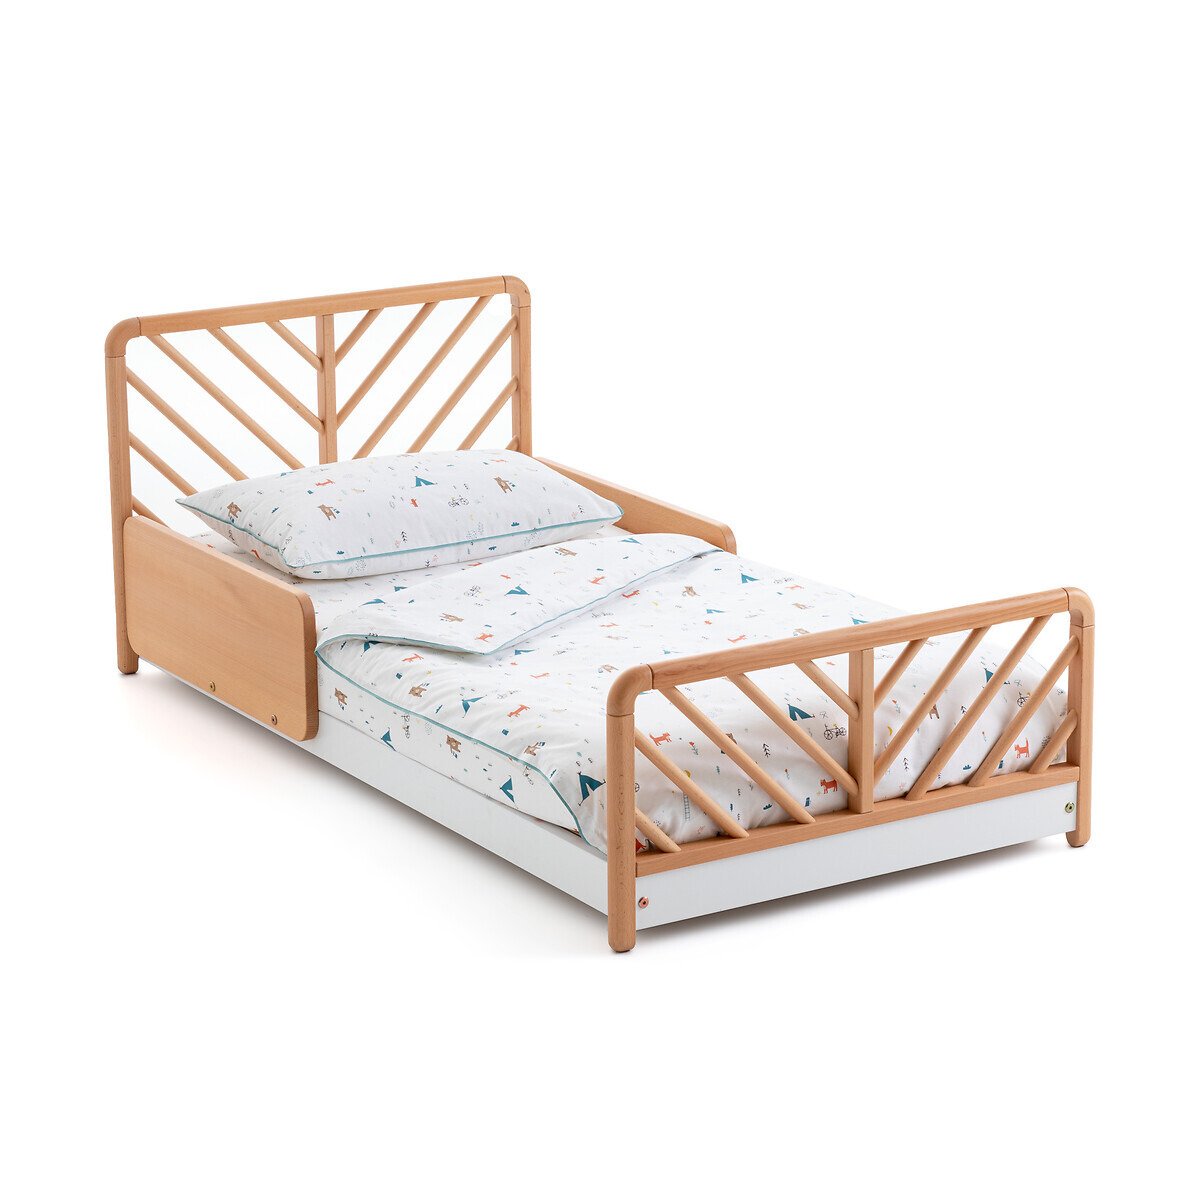 Montessori Bed - image 1